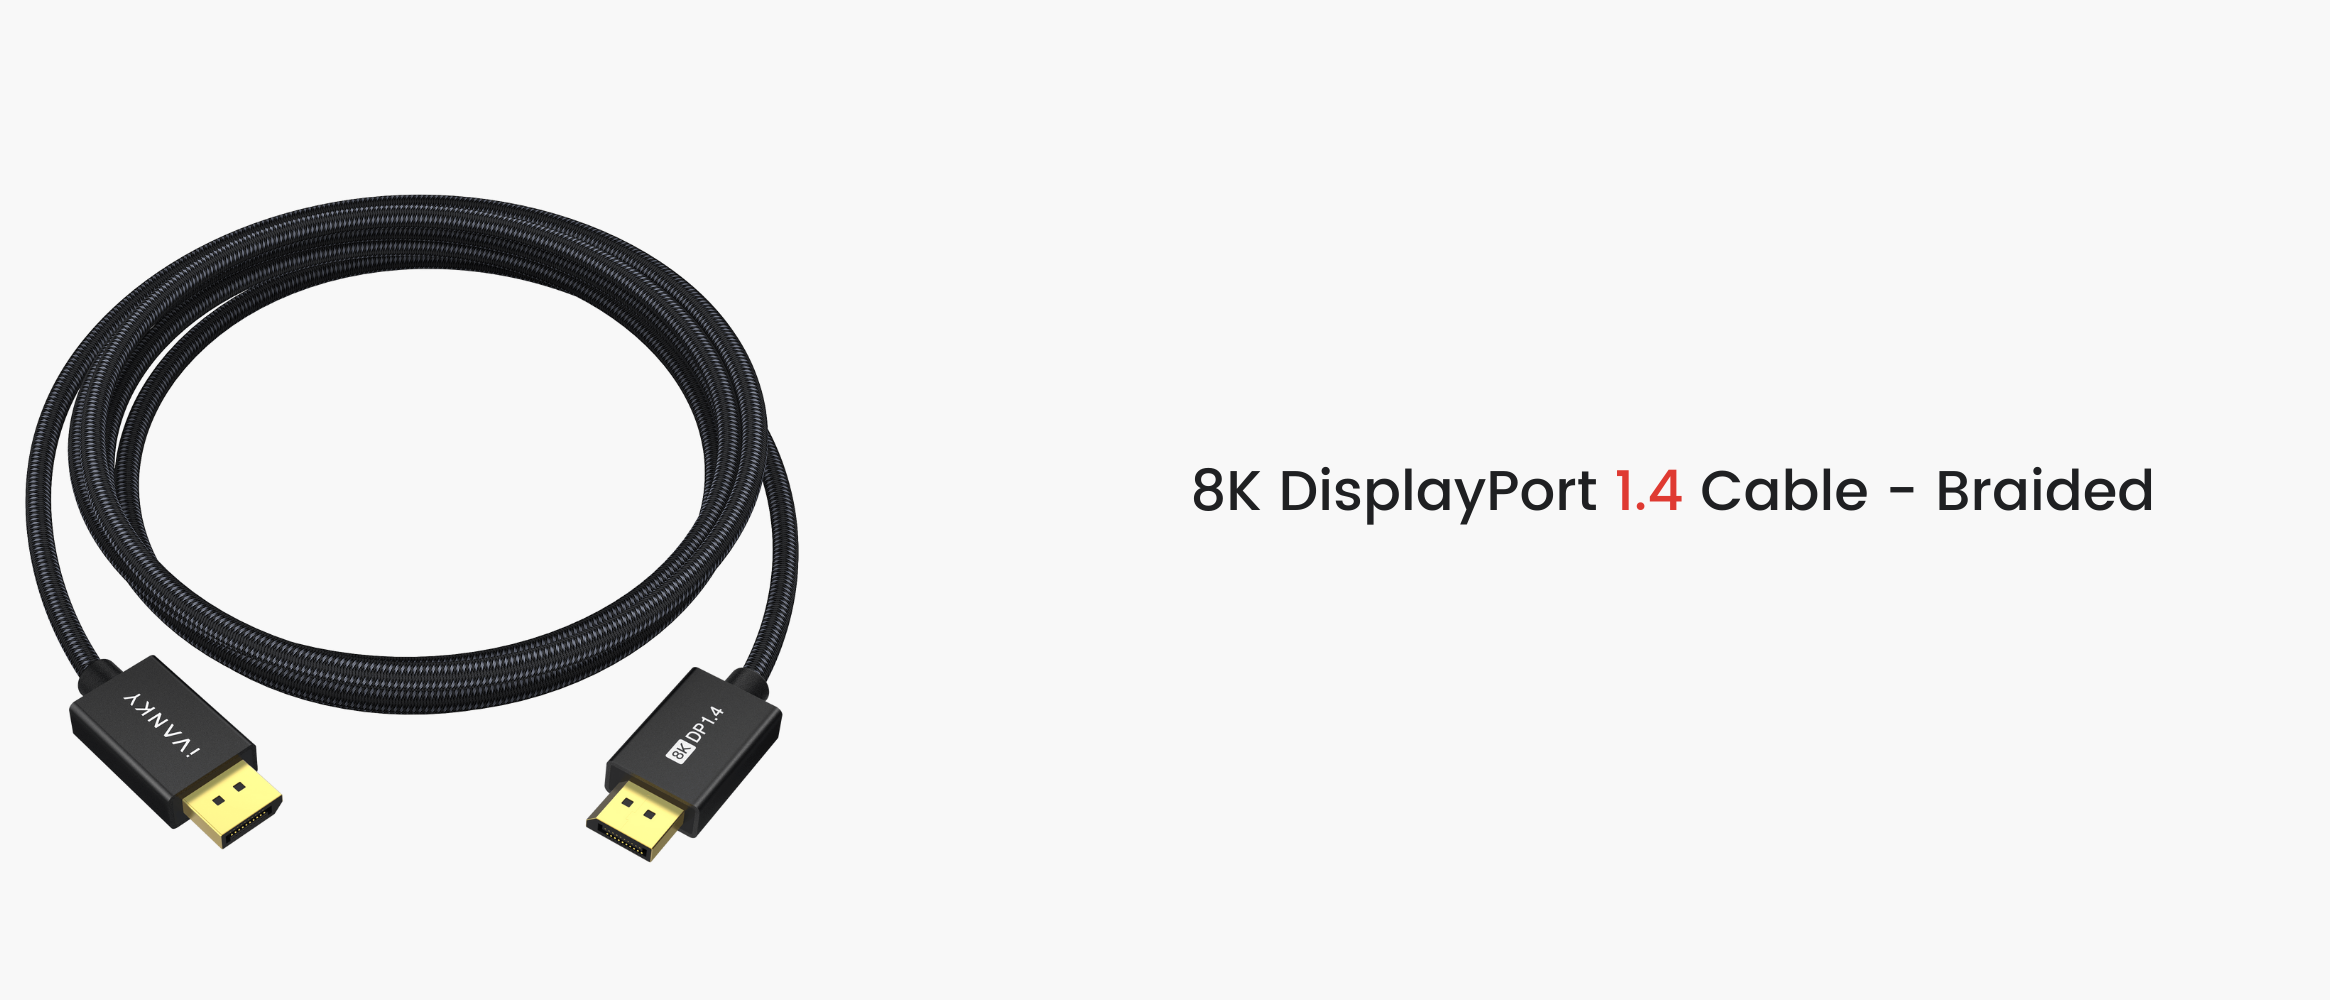 8K DisplayPort 1.4 Cable - Braided